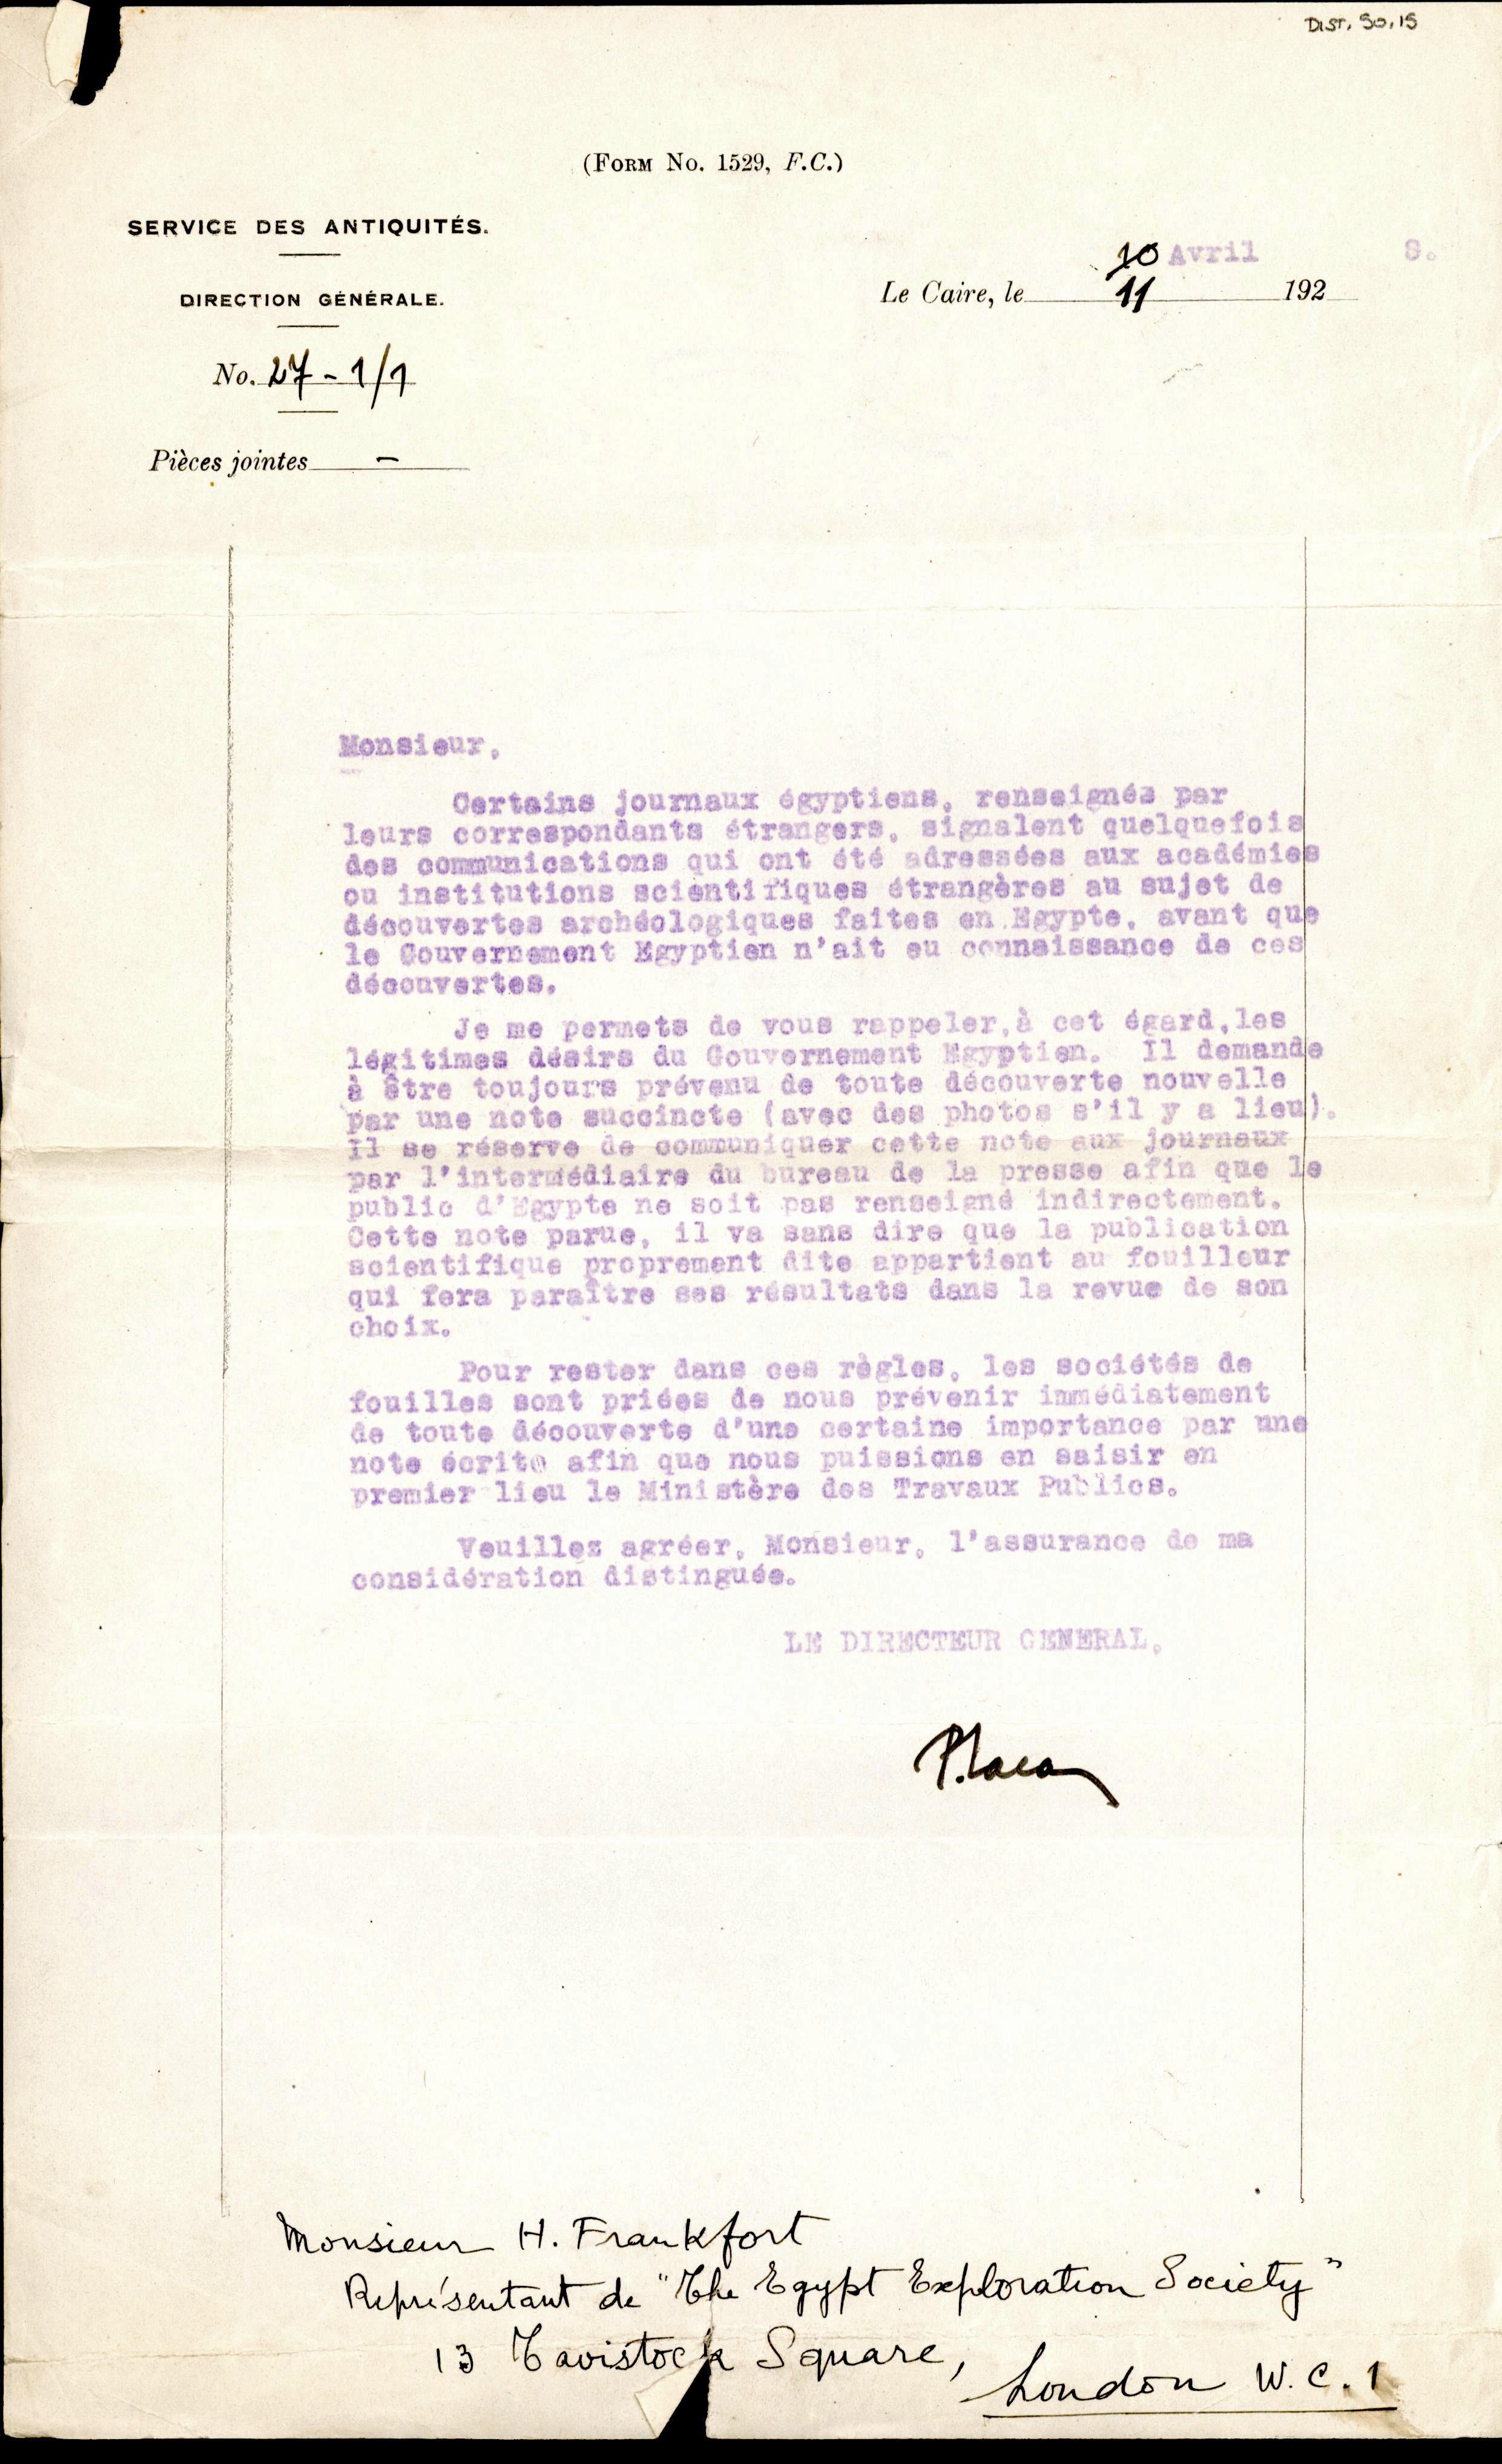 1926-39 correspondence with Antiquities Service DIST.50.15